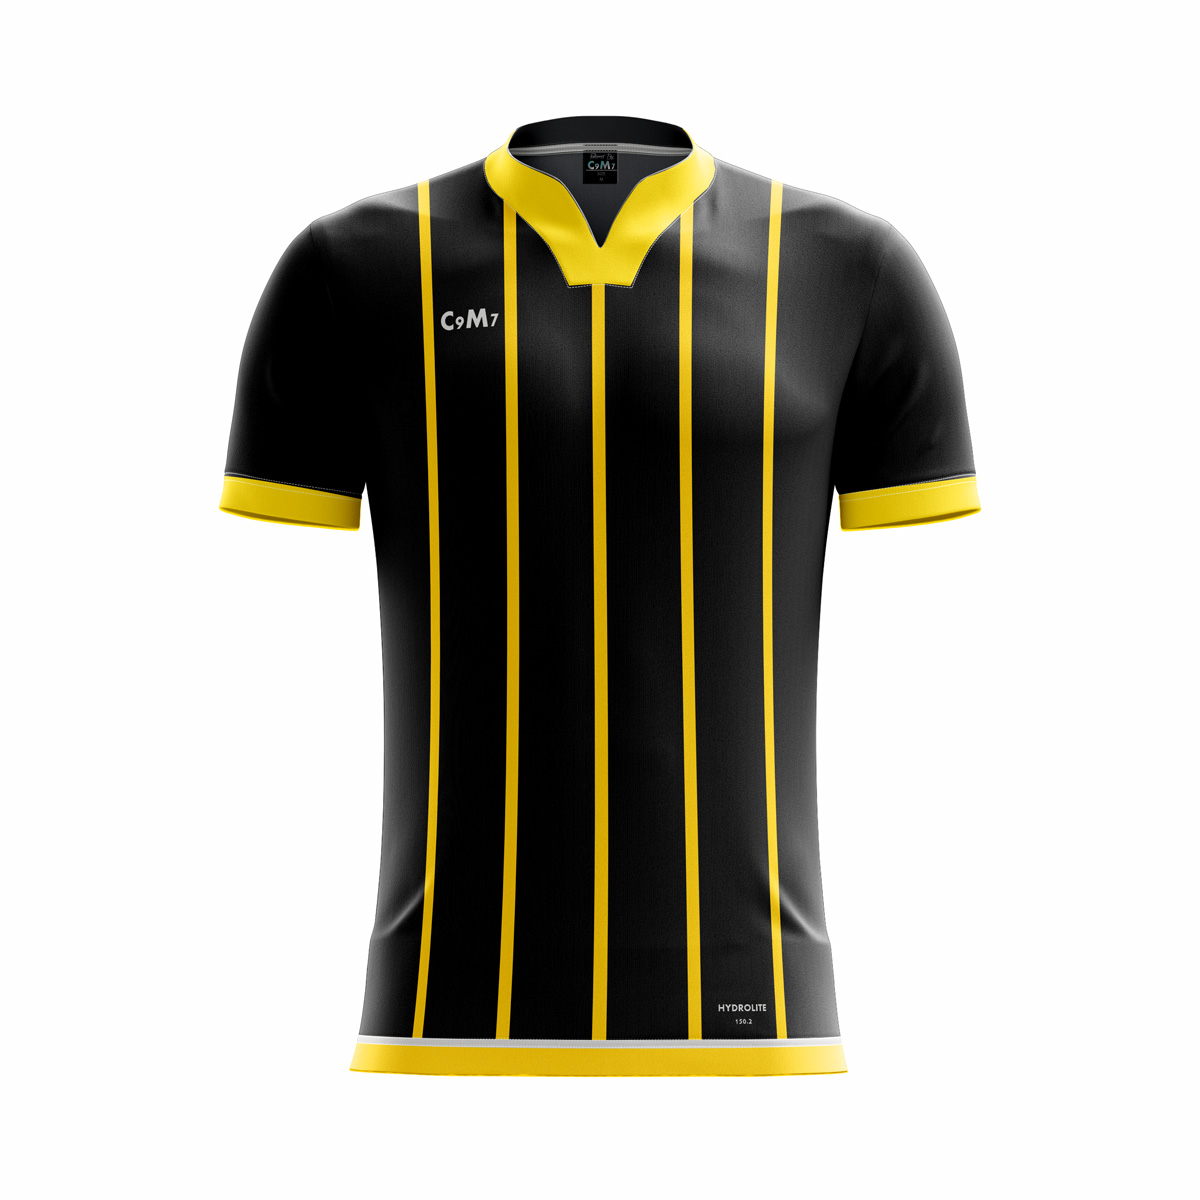 yellow jersey soccer team